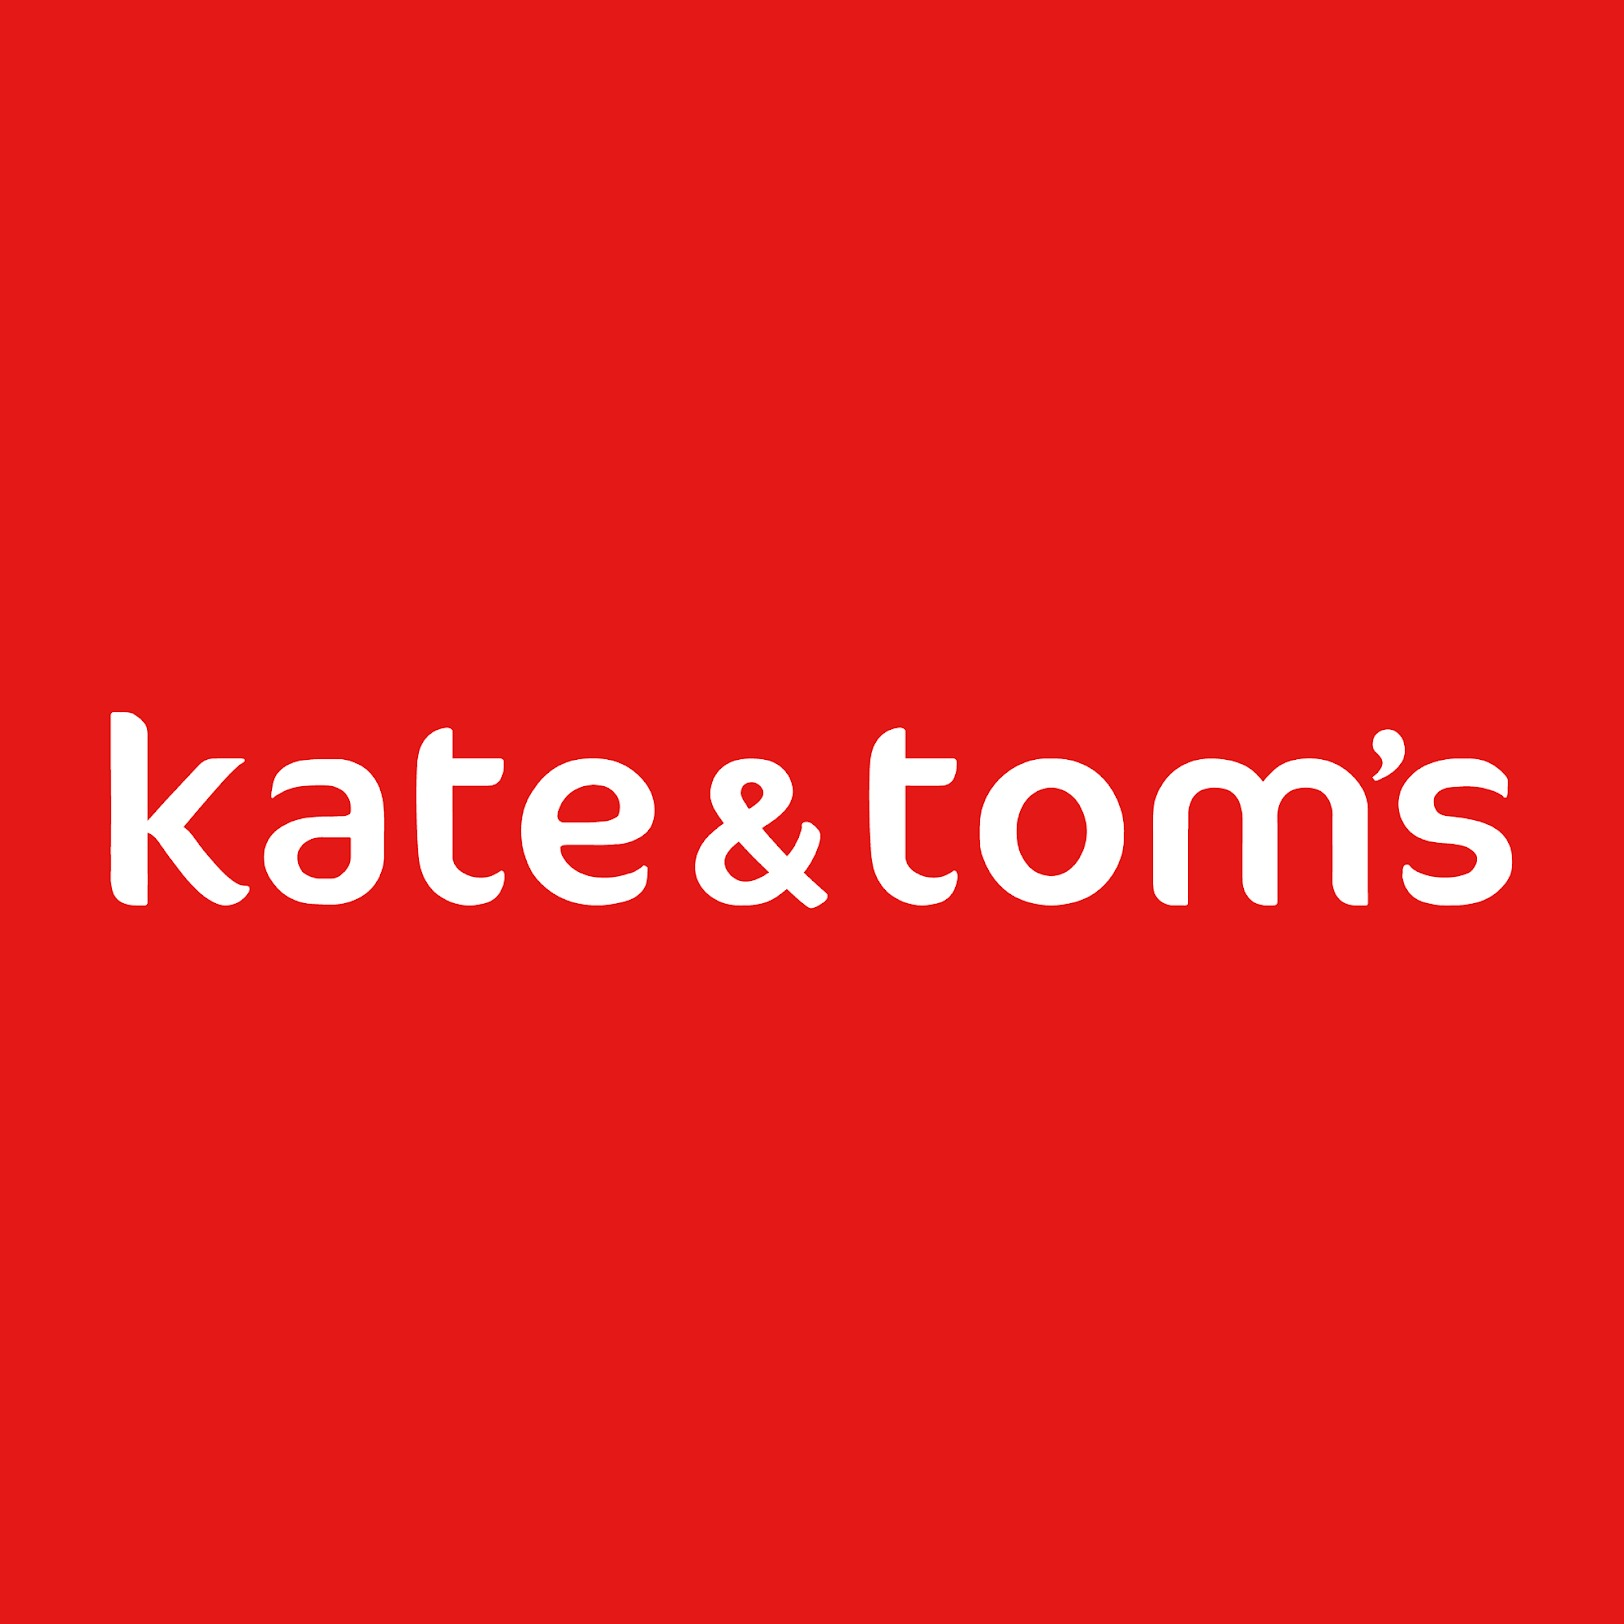 kate & tom's - Cheltenham, Gloucestershire GL50 3PQ - 01242 235151 | ShowMeLocal.com